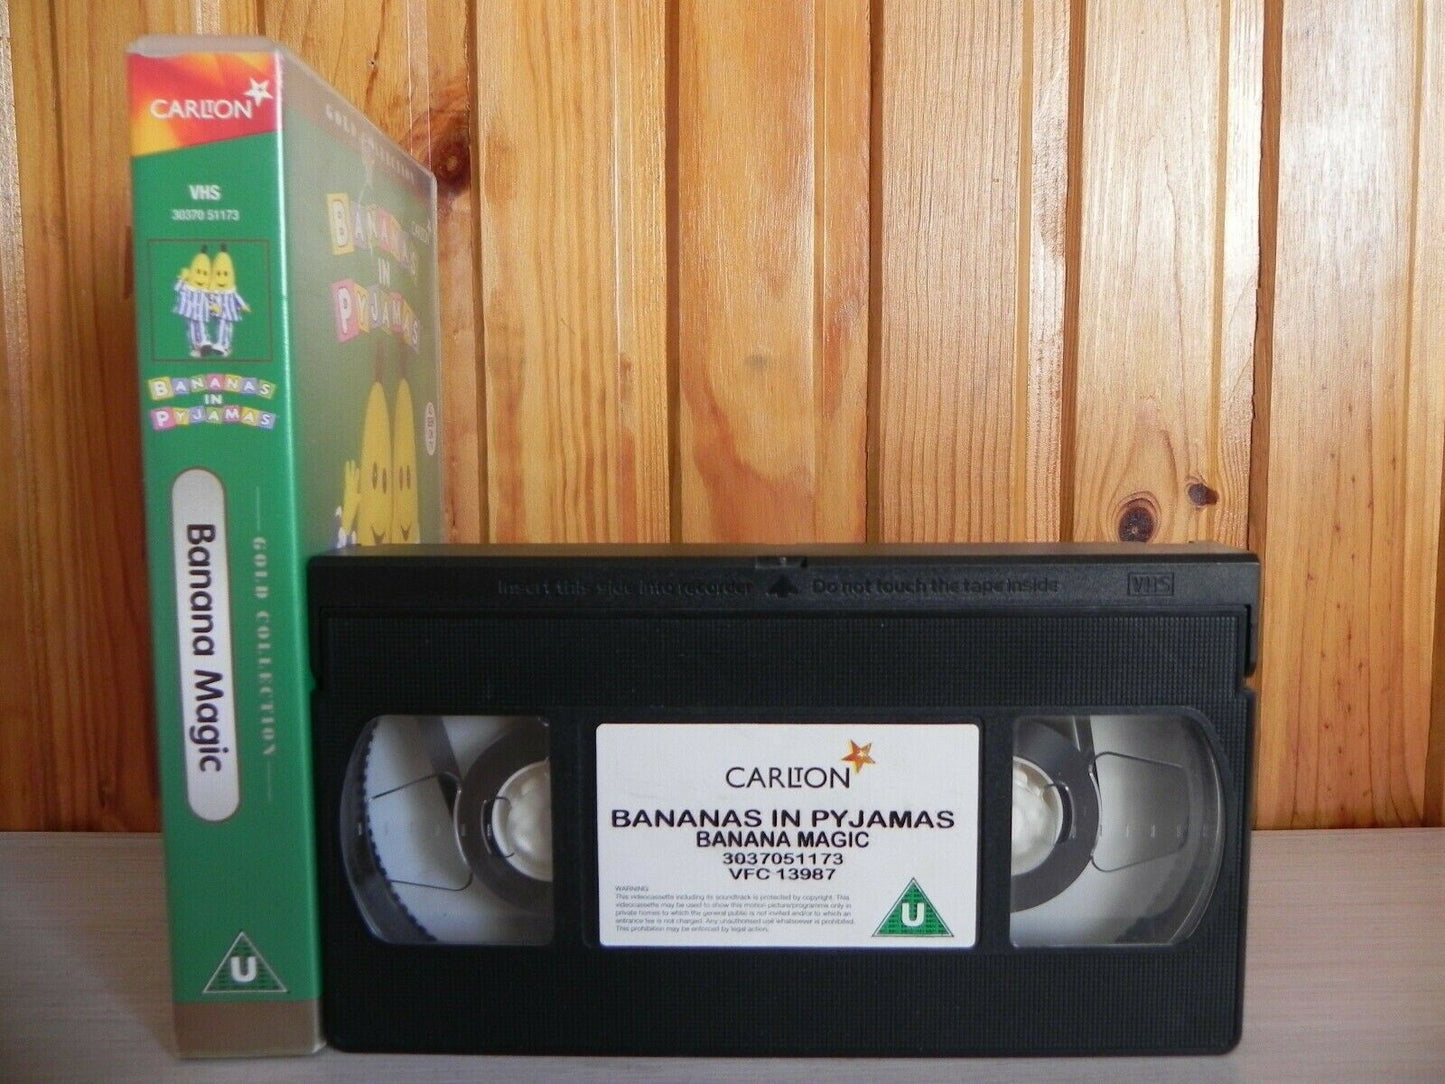 Bananas In Pyjamas: Banana Magic; [Gold Collection] Animated - Children's - Pal VHS-